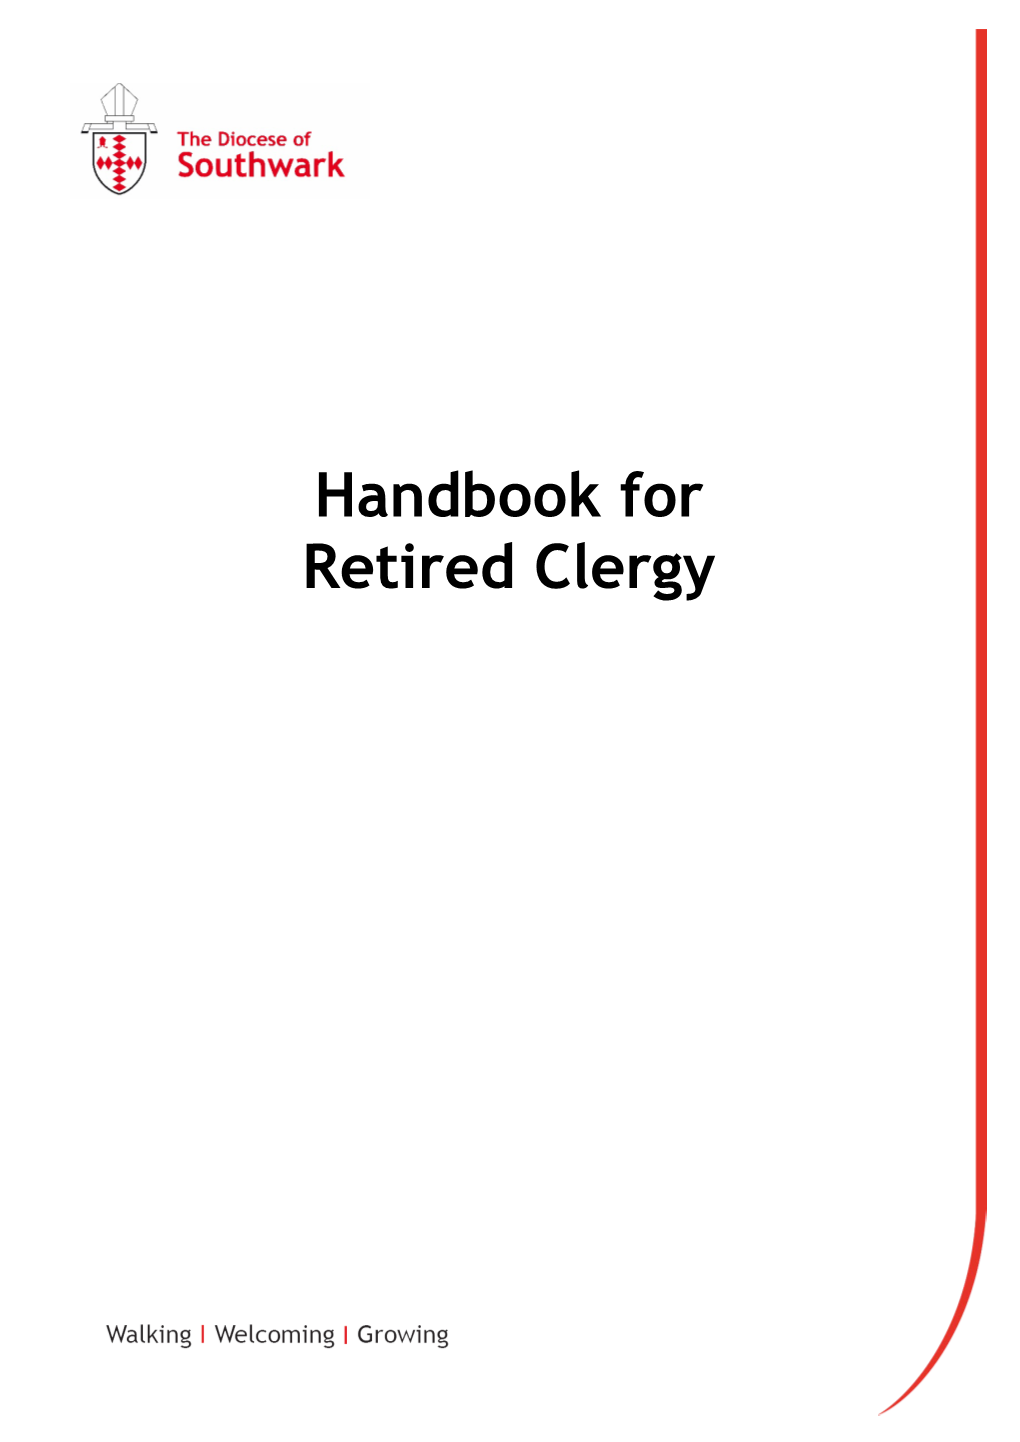 Retired Clergy Handbook